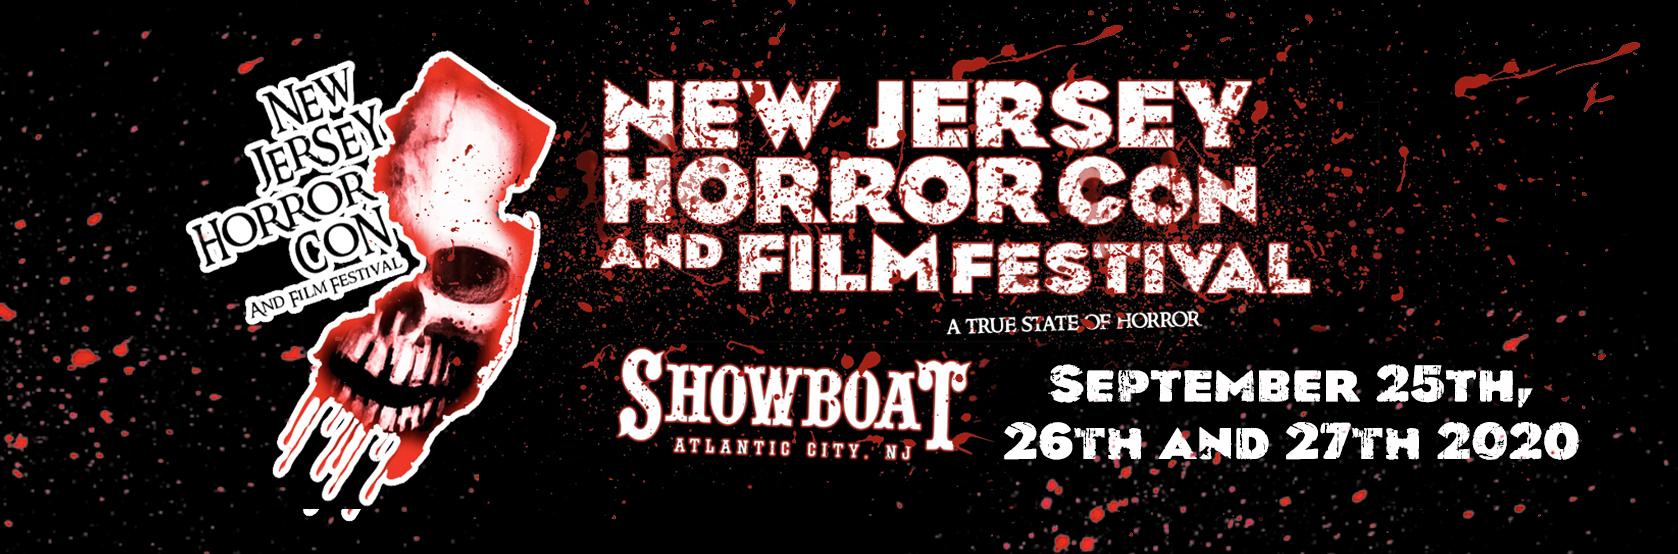 NJ Horror Con Tickets For SEPTEMBER 2020